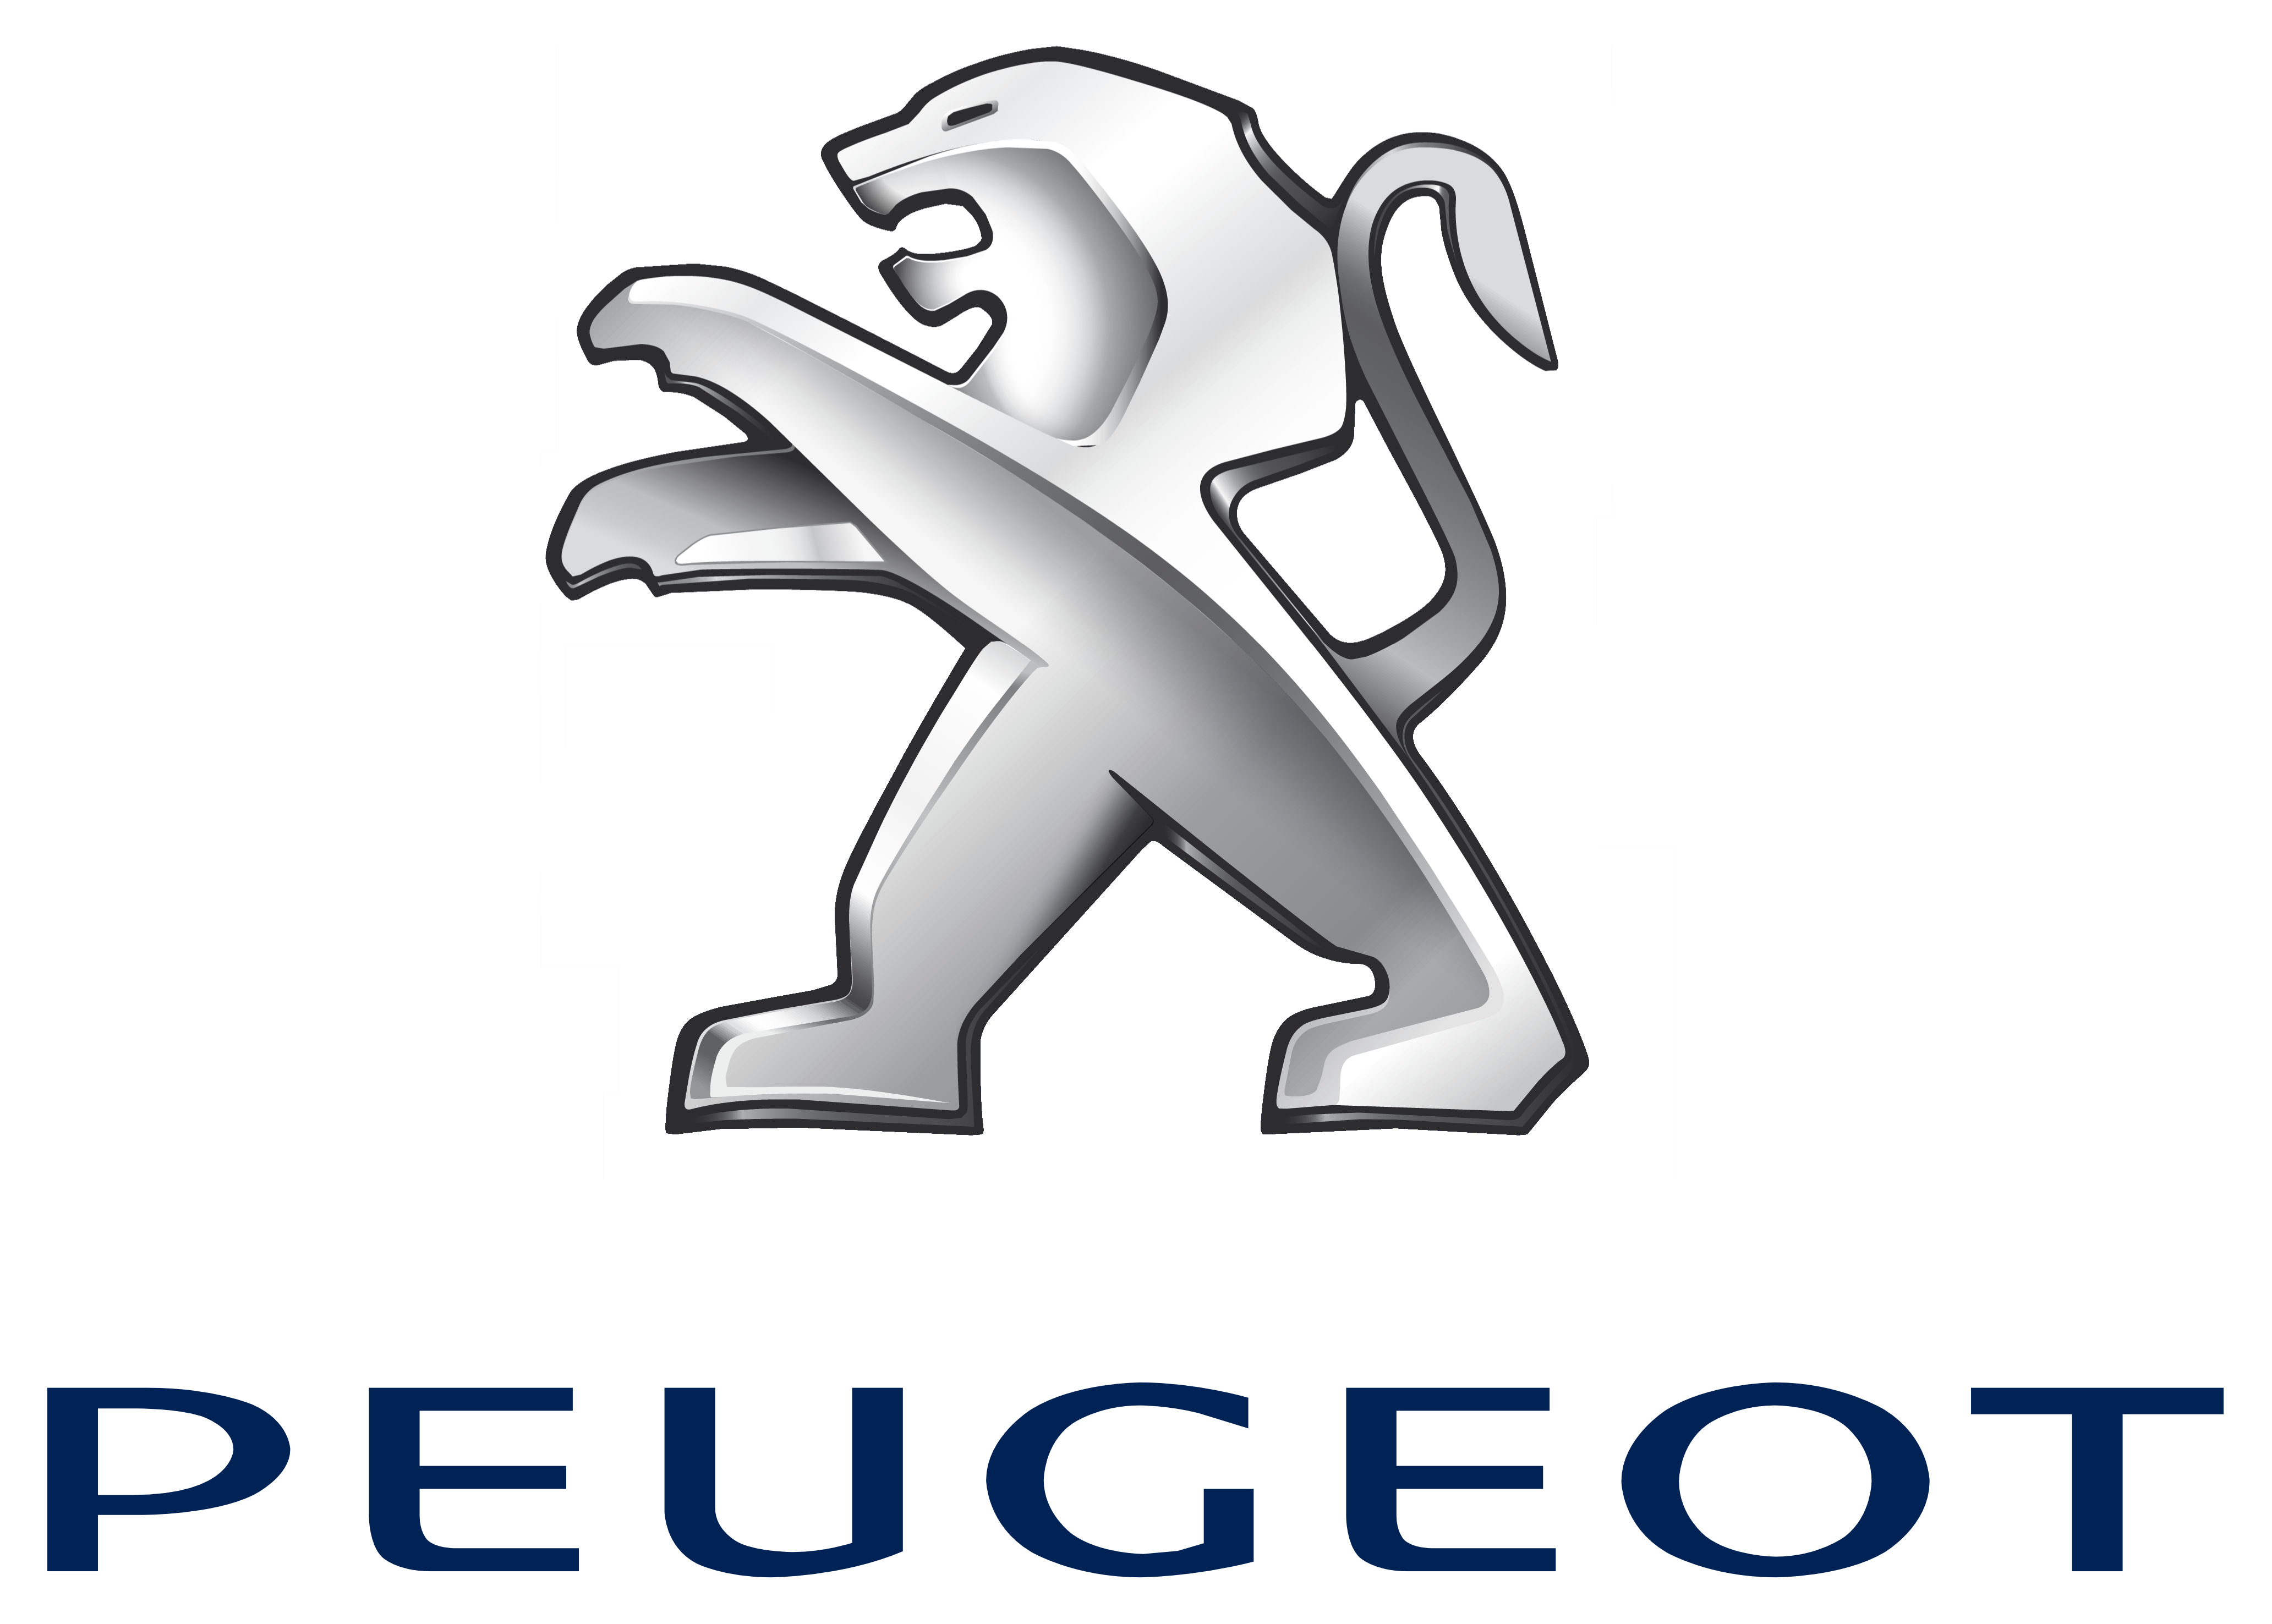 Logotipo da Peugeot